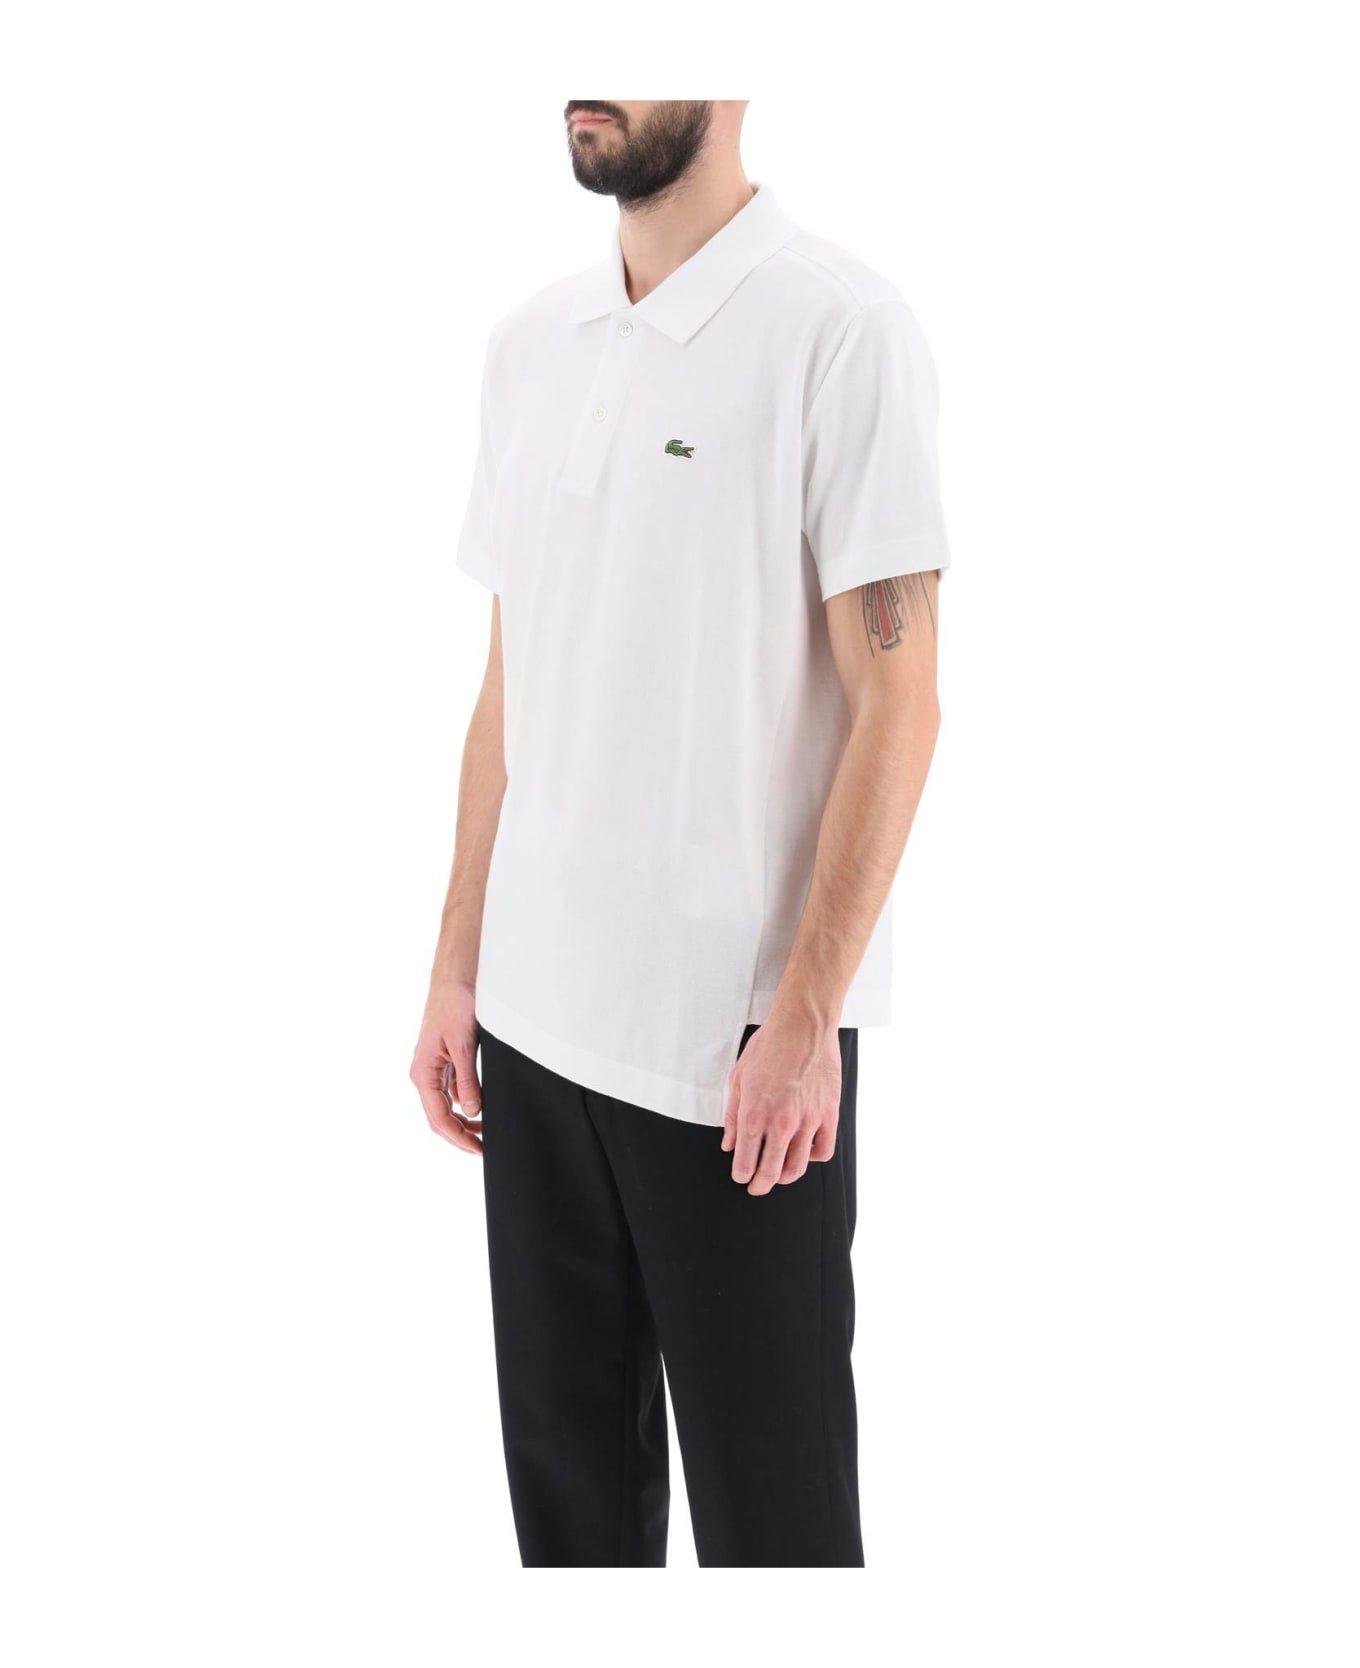 Comme des Garçons Shirt Lacoste Crocodile Polo Shirt - WHITE (White)